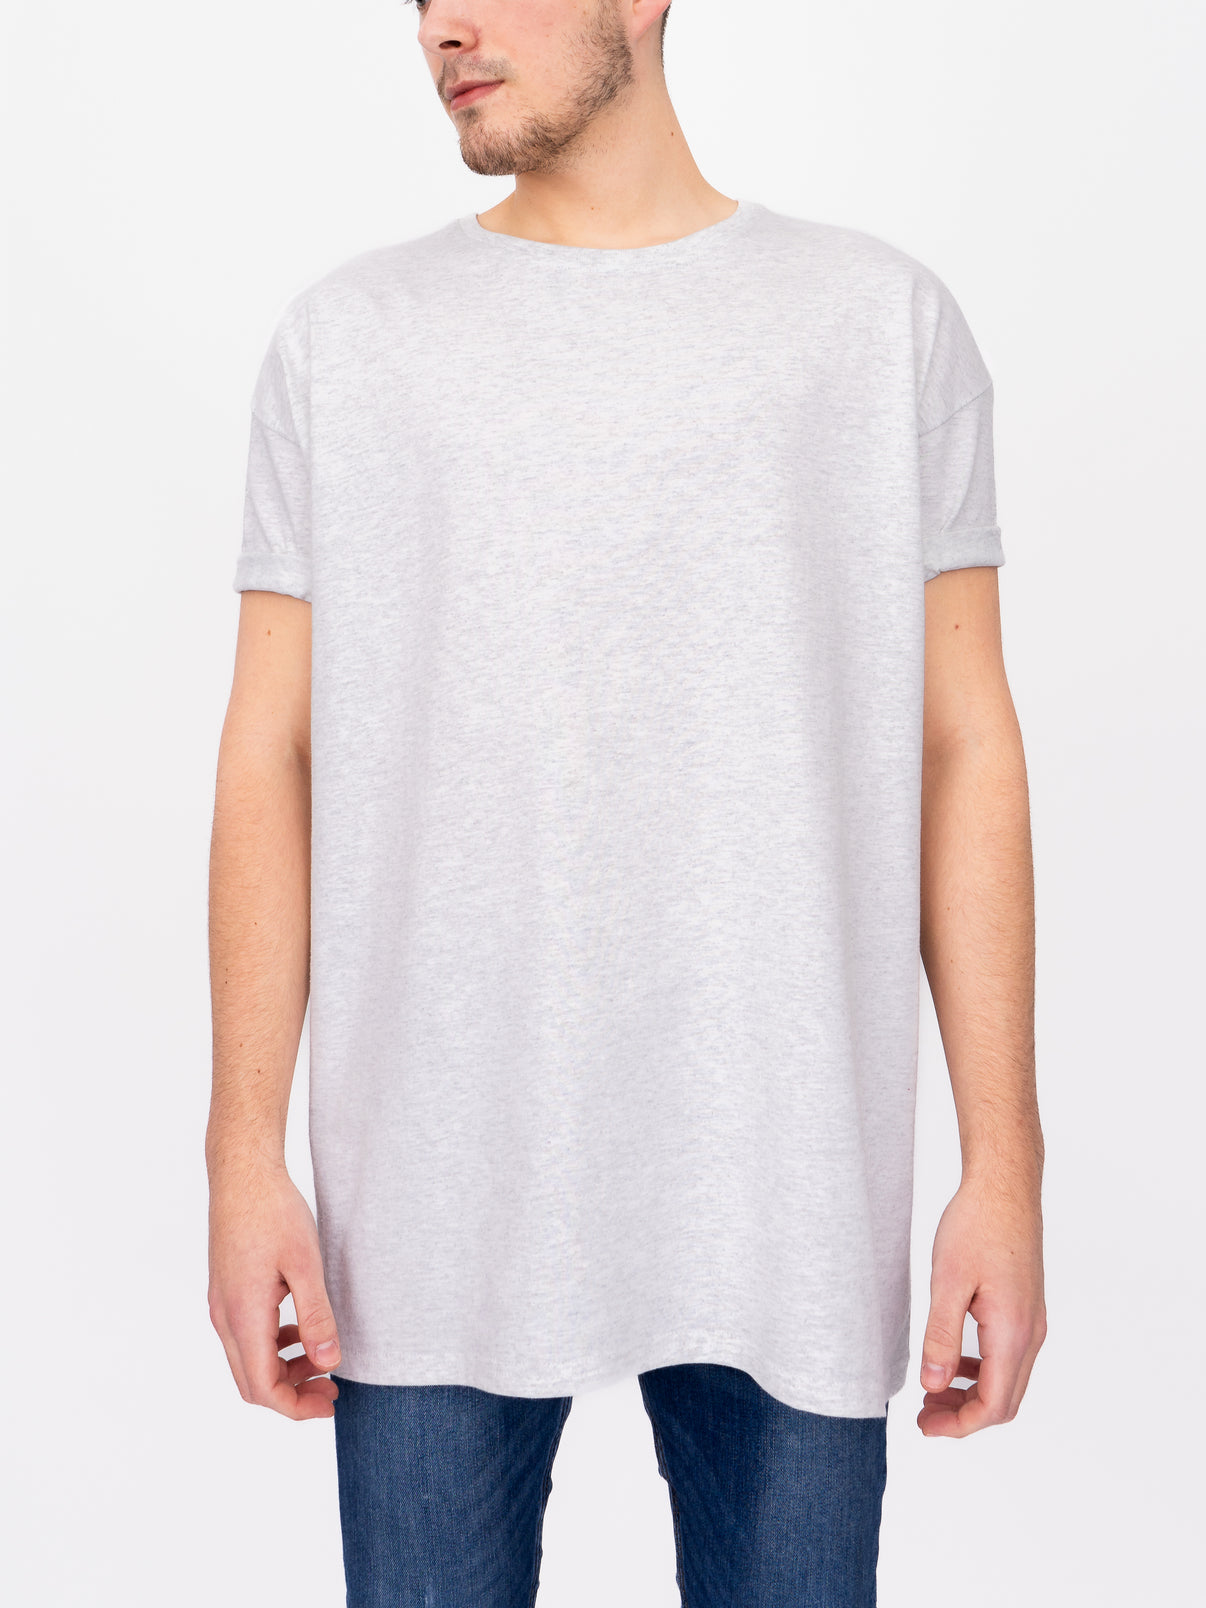 Oversize T-Shirt in Ash Grey - DEEP Clothing